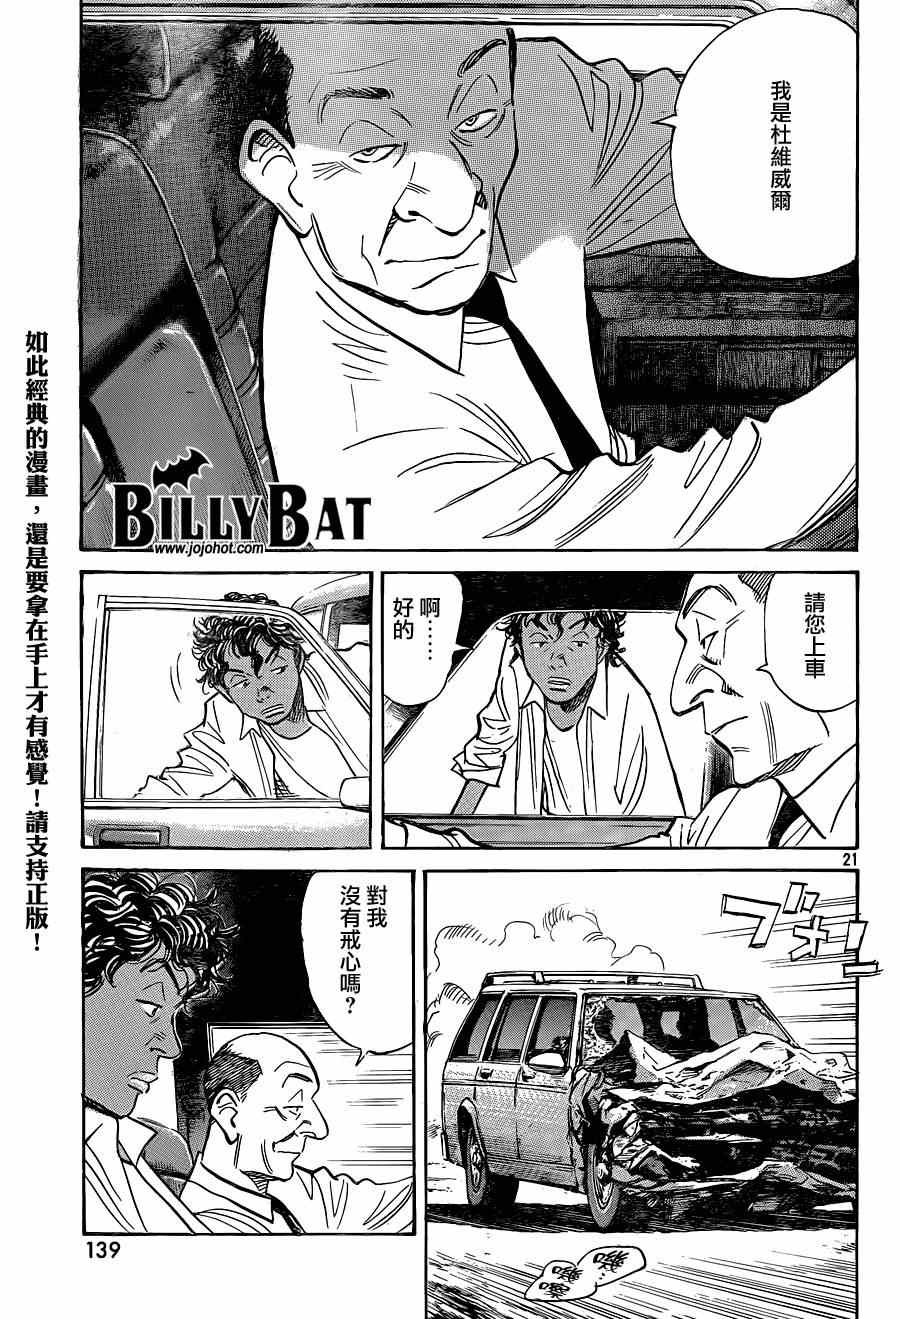 《BILLY BAT》漫画 蝙蝠比利 124集